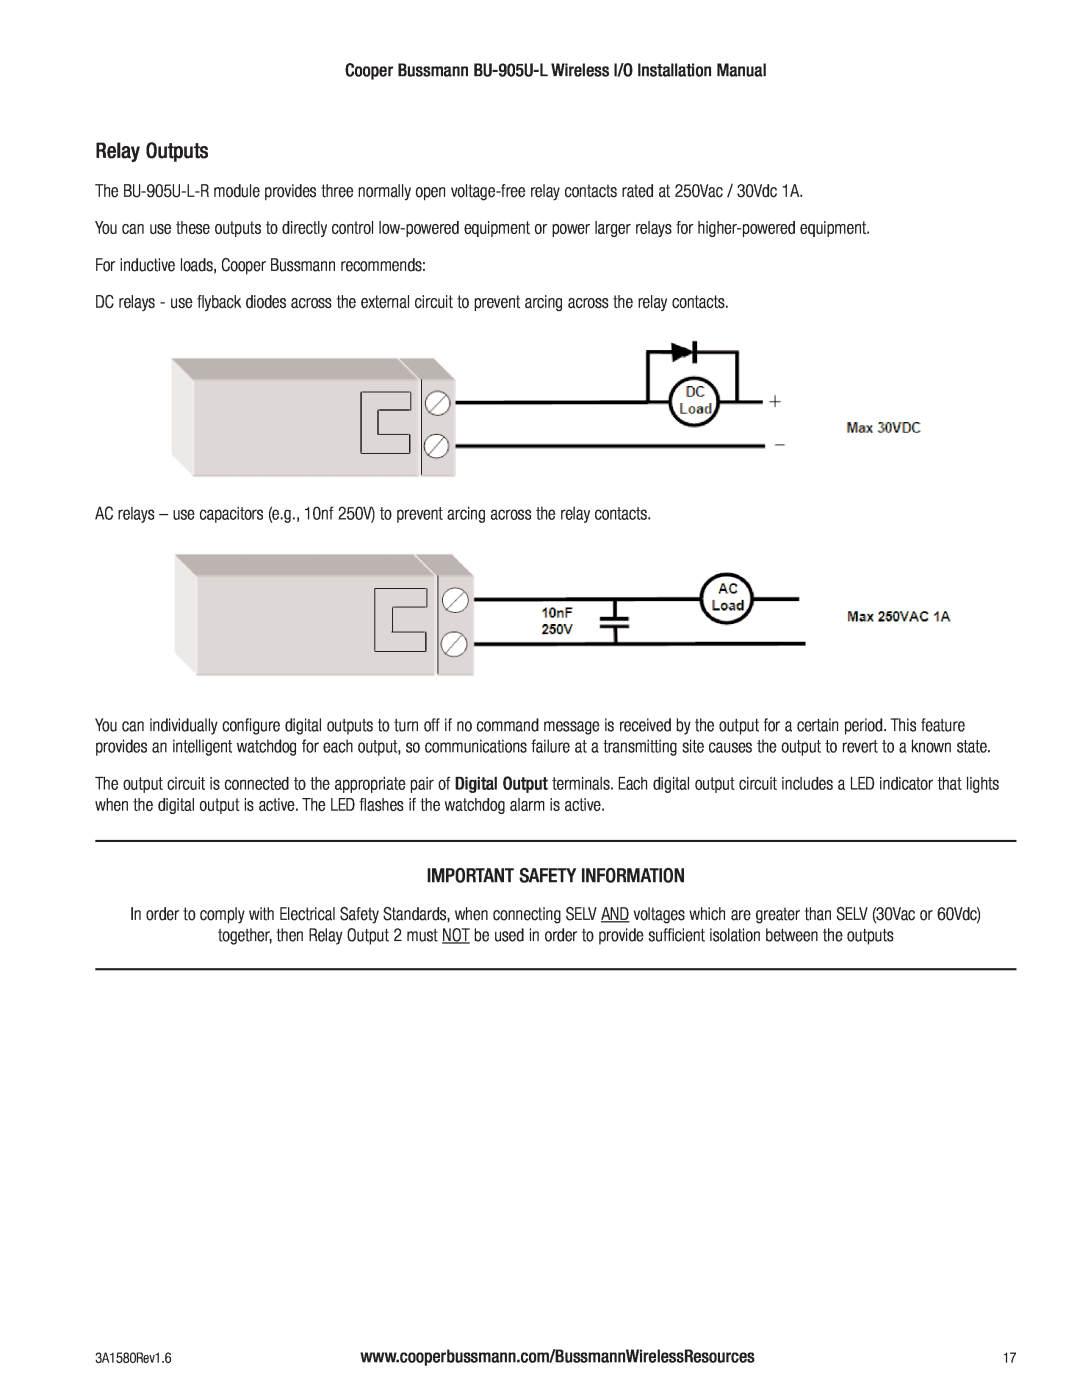 Cooper Bussmann BU-905U-L installation manual Relay Outputs, Important Safety Information 